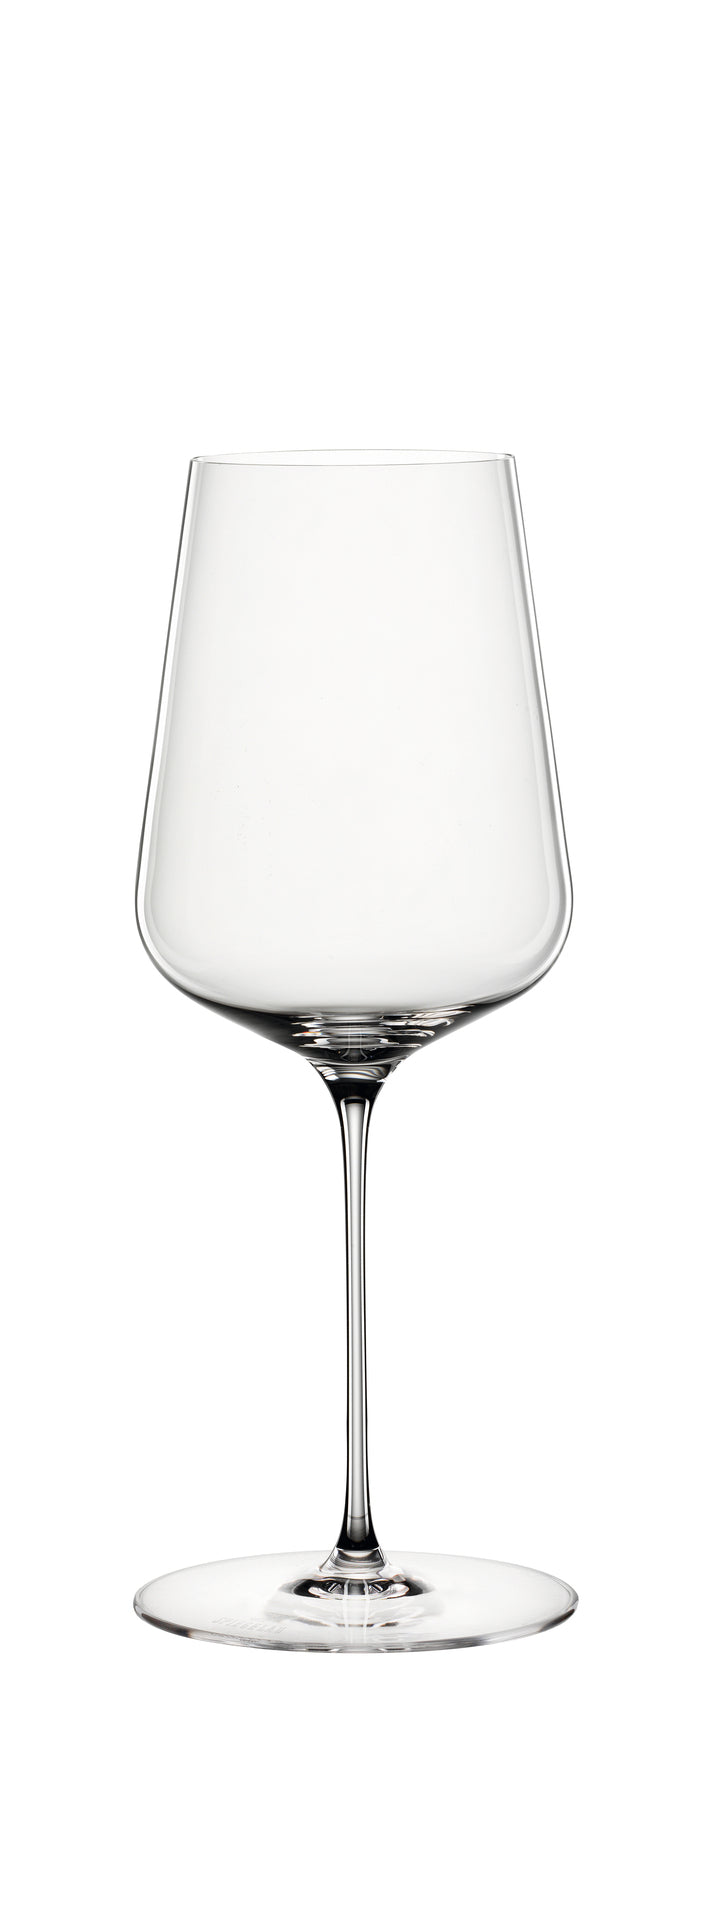 Spiegelau Definition Universal Wine Glasses, Set of 2